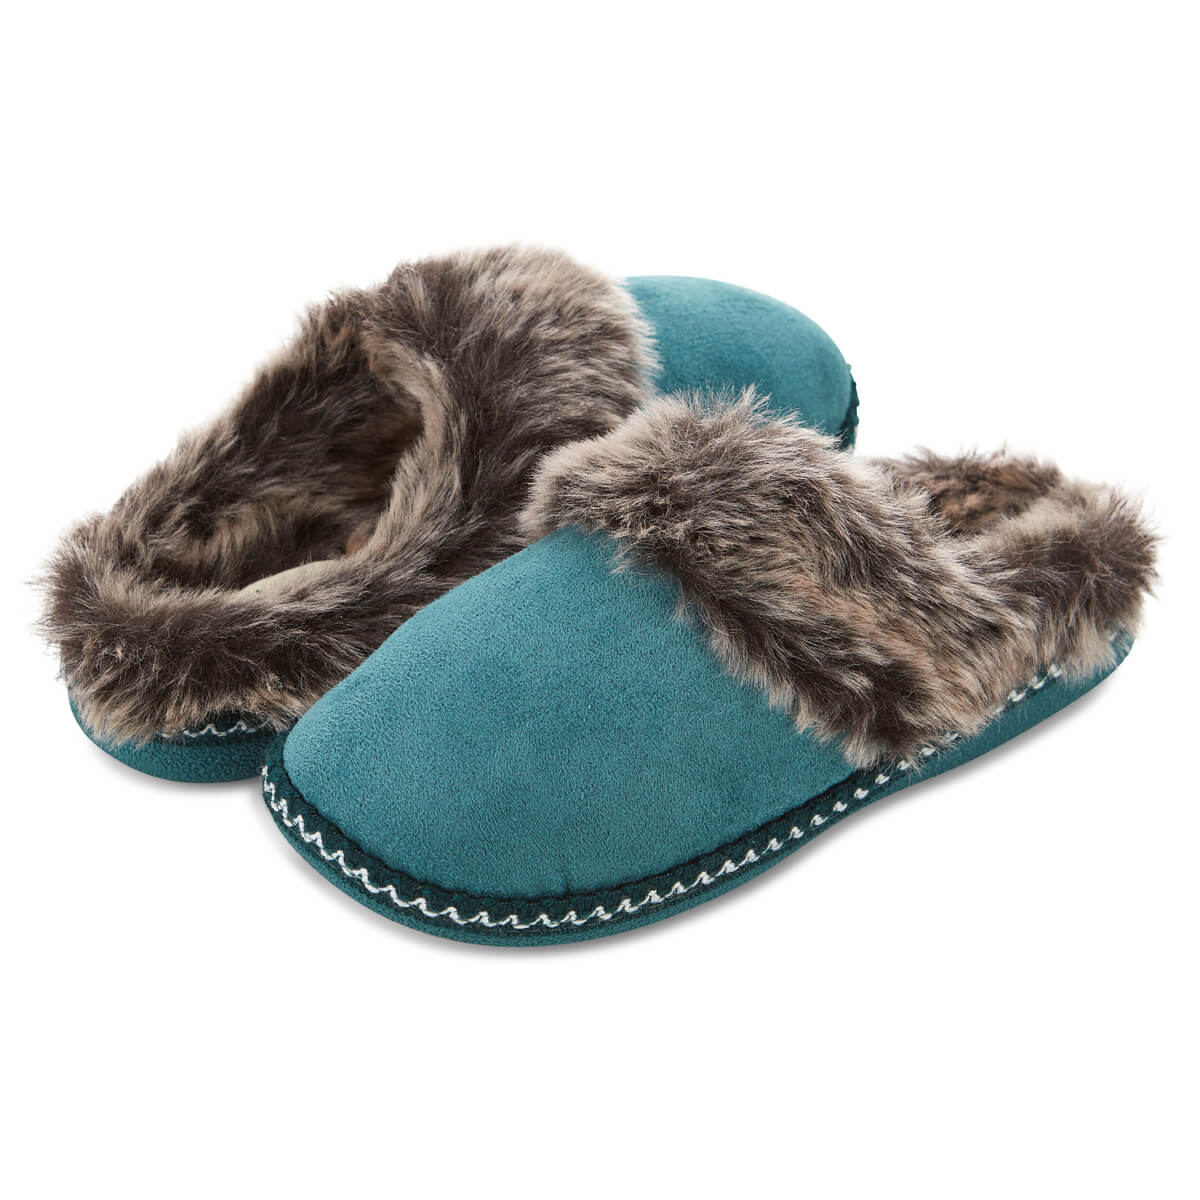 Nature slippers – furbysofie